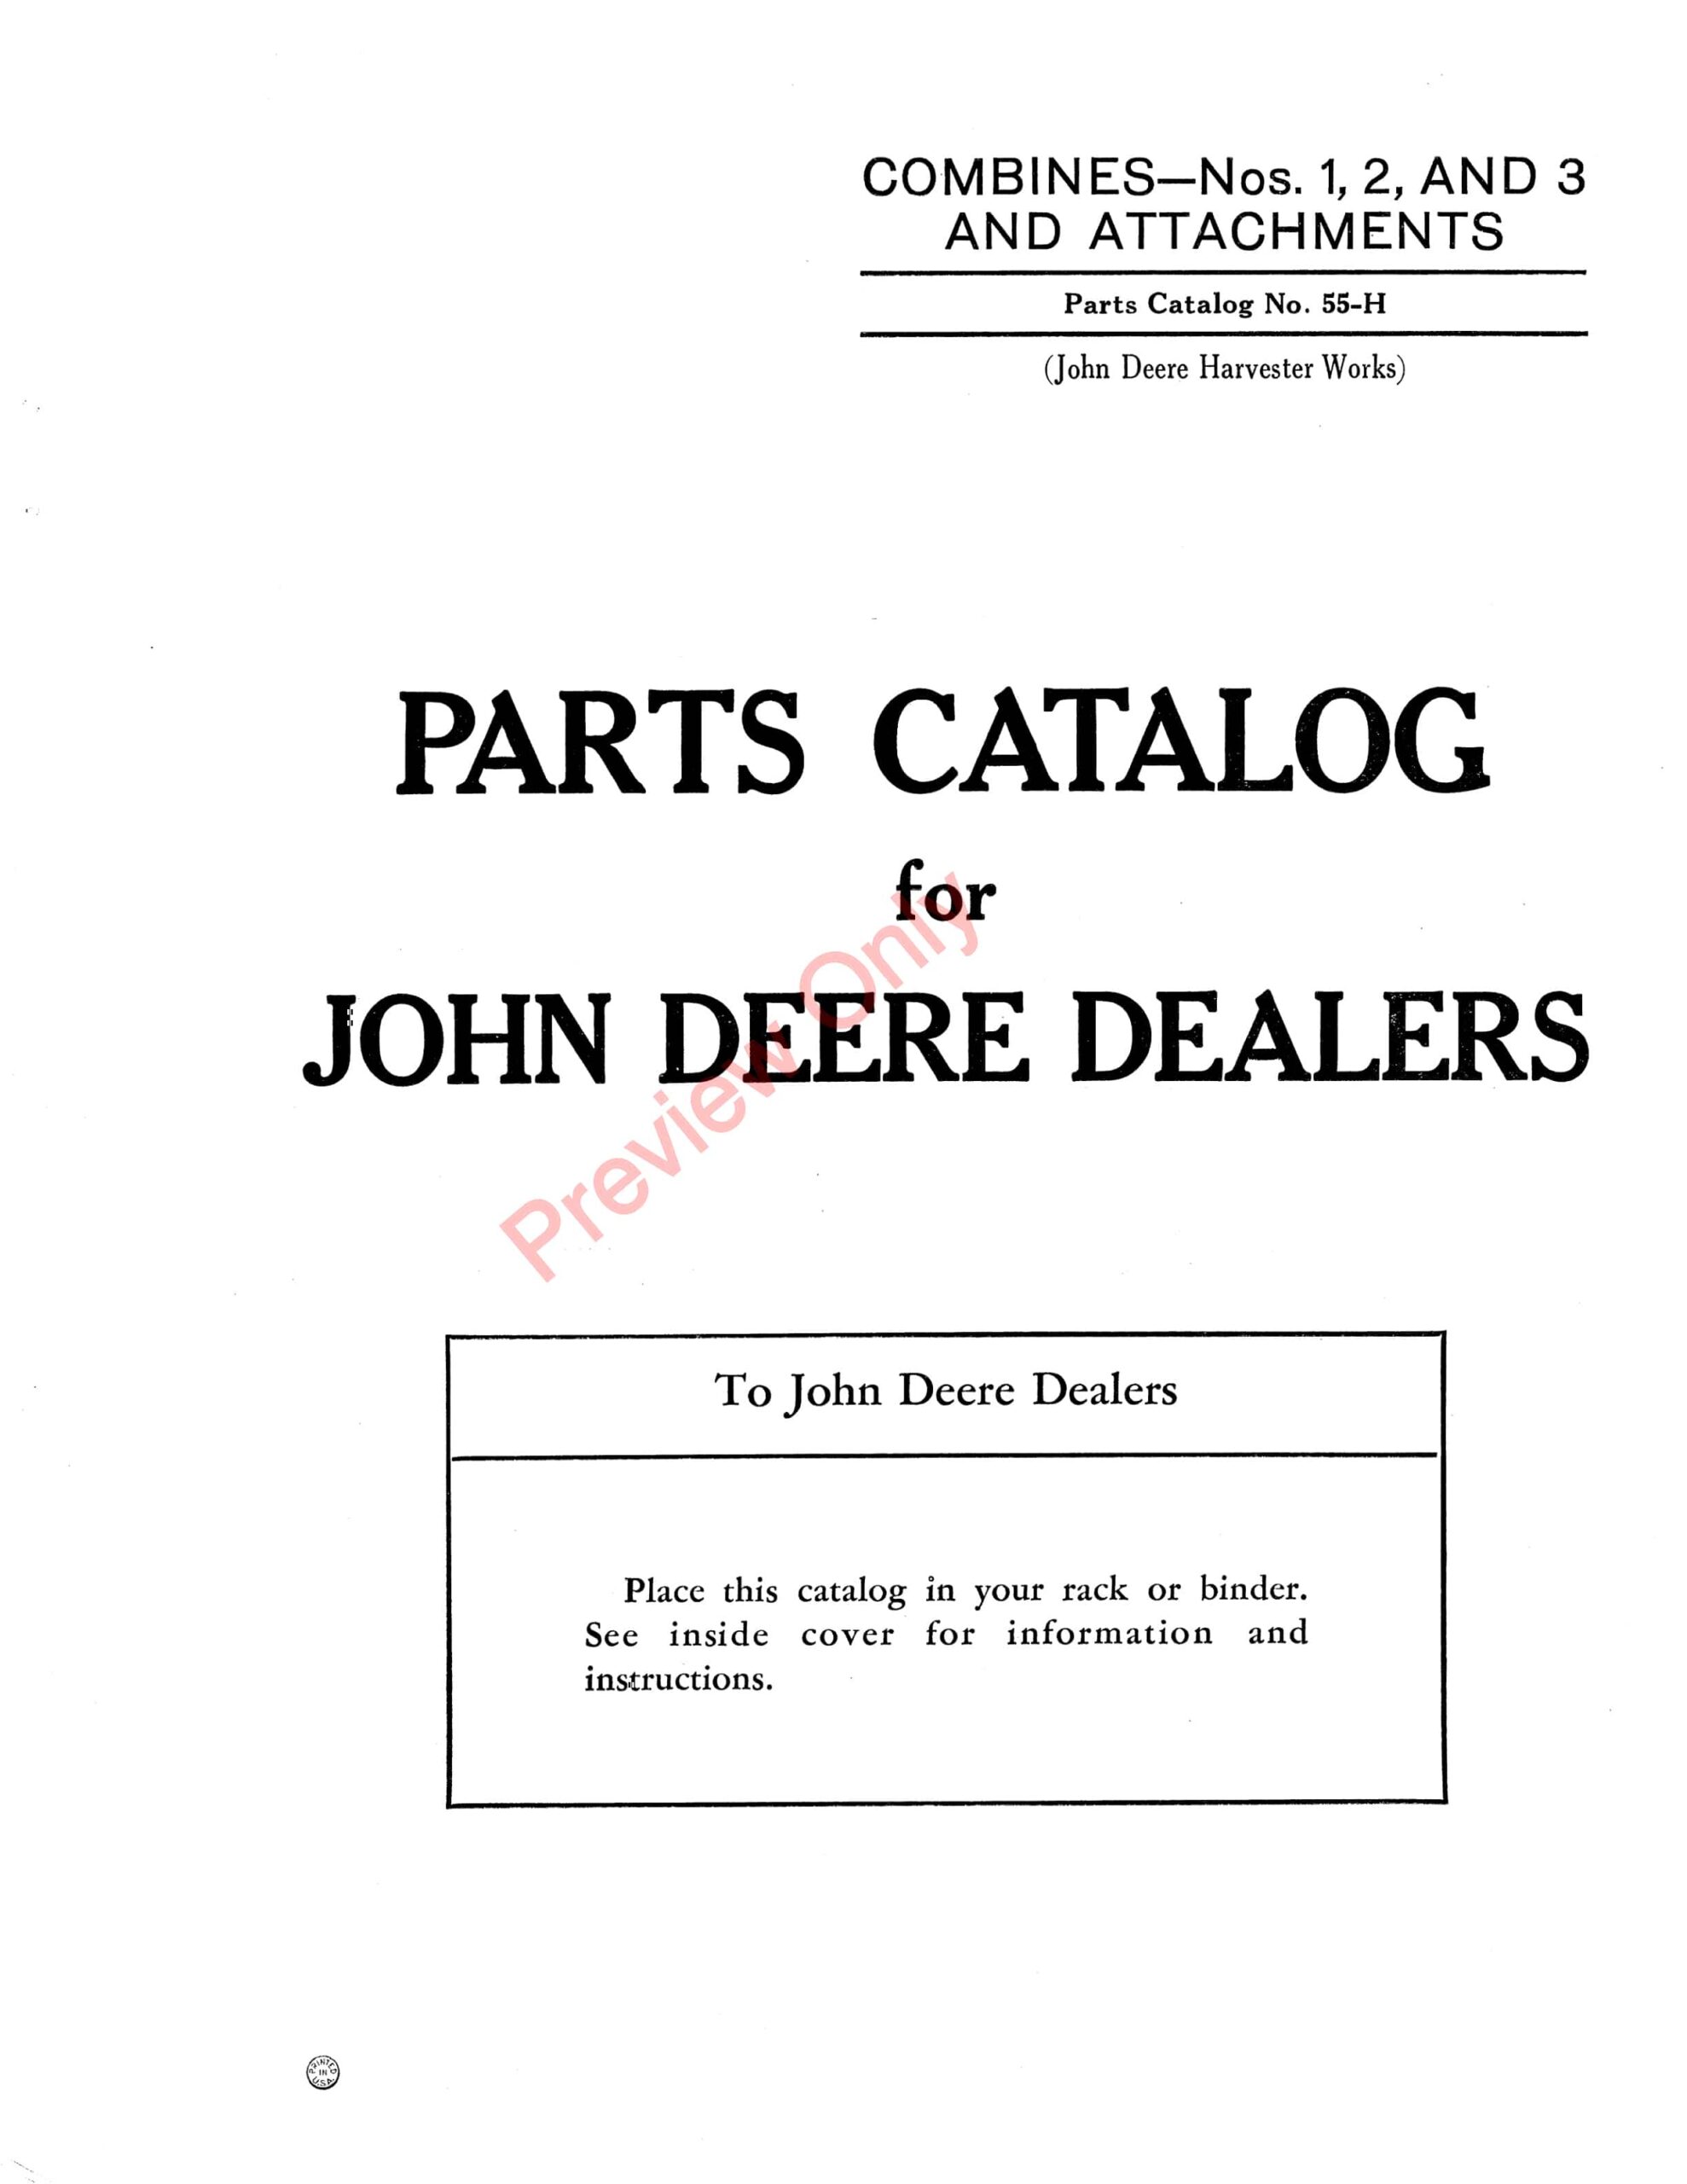 John Deere No. 1, 2 and 3 Combines wAttachments Parts Catalog CAT55H 01MAY45-1